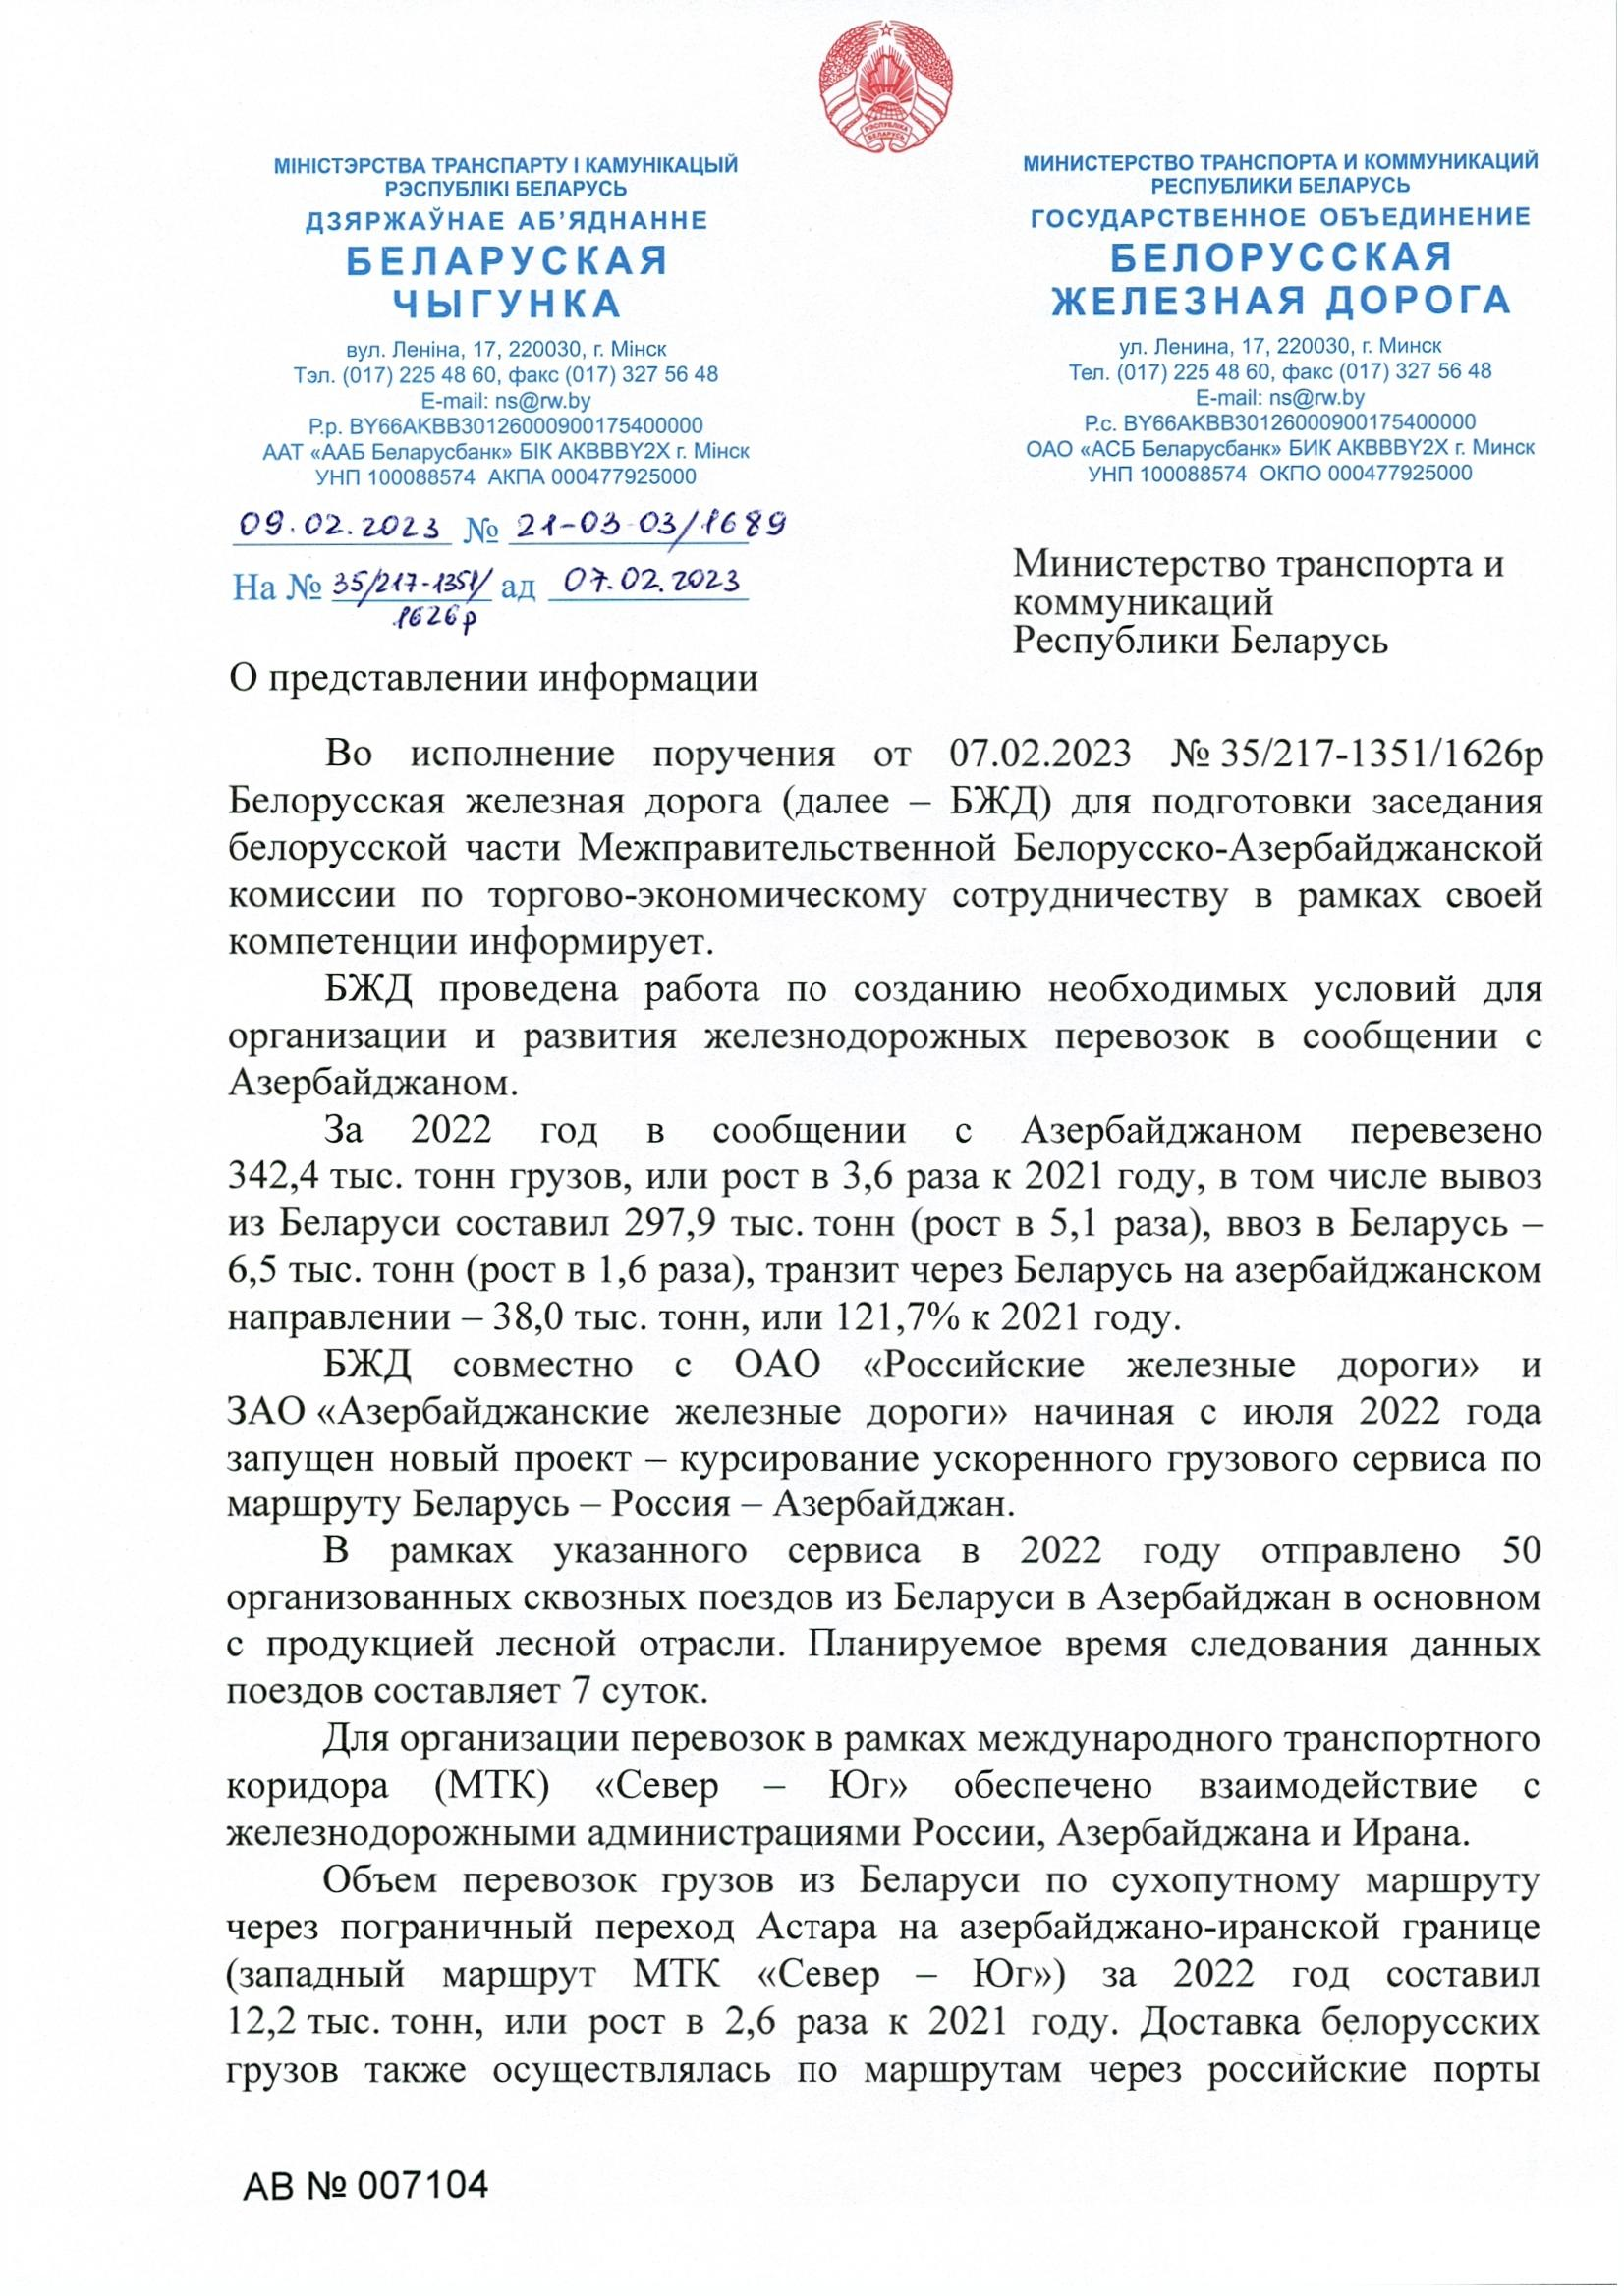 Письмо БЖД в Министерство транспорта от 09.02.2023 (Страница 1)